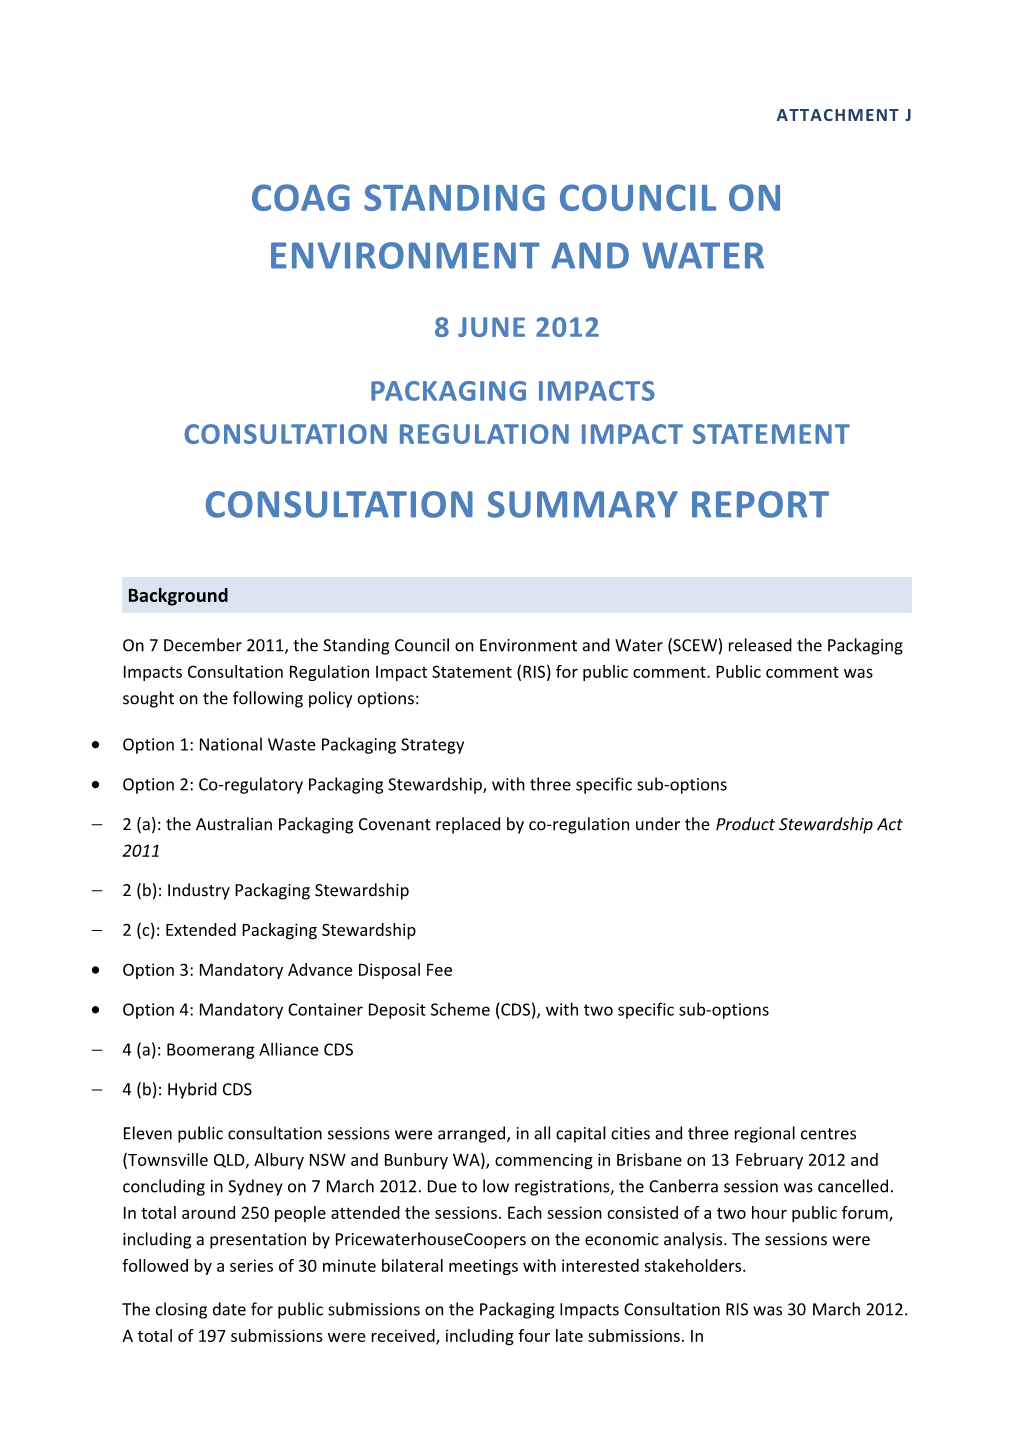 Attachment J - CRIS Consultation Summary